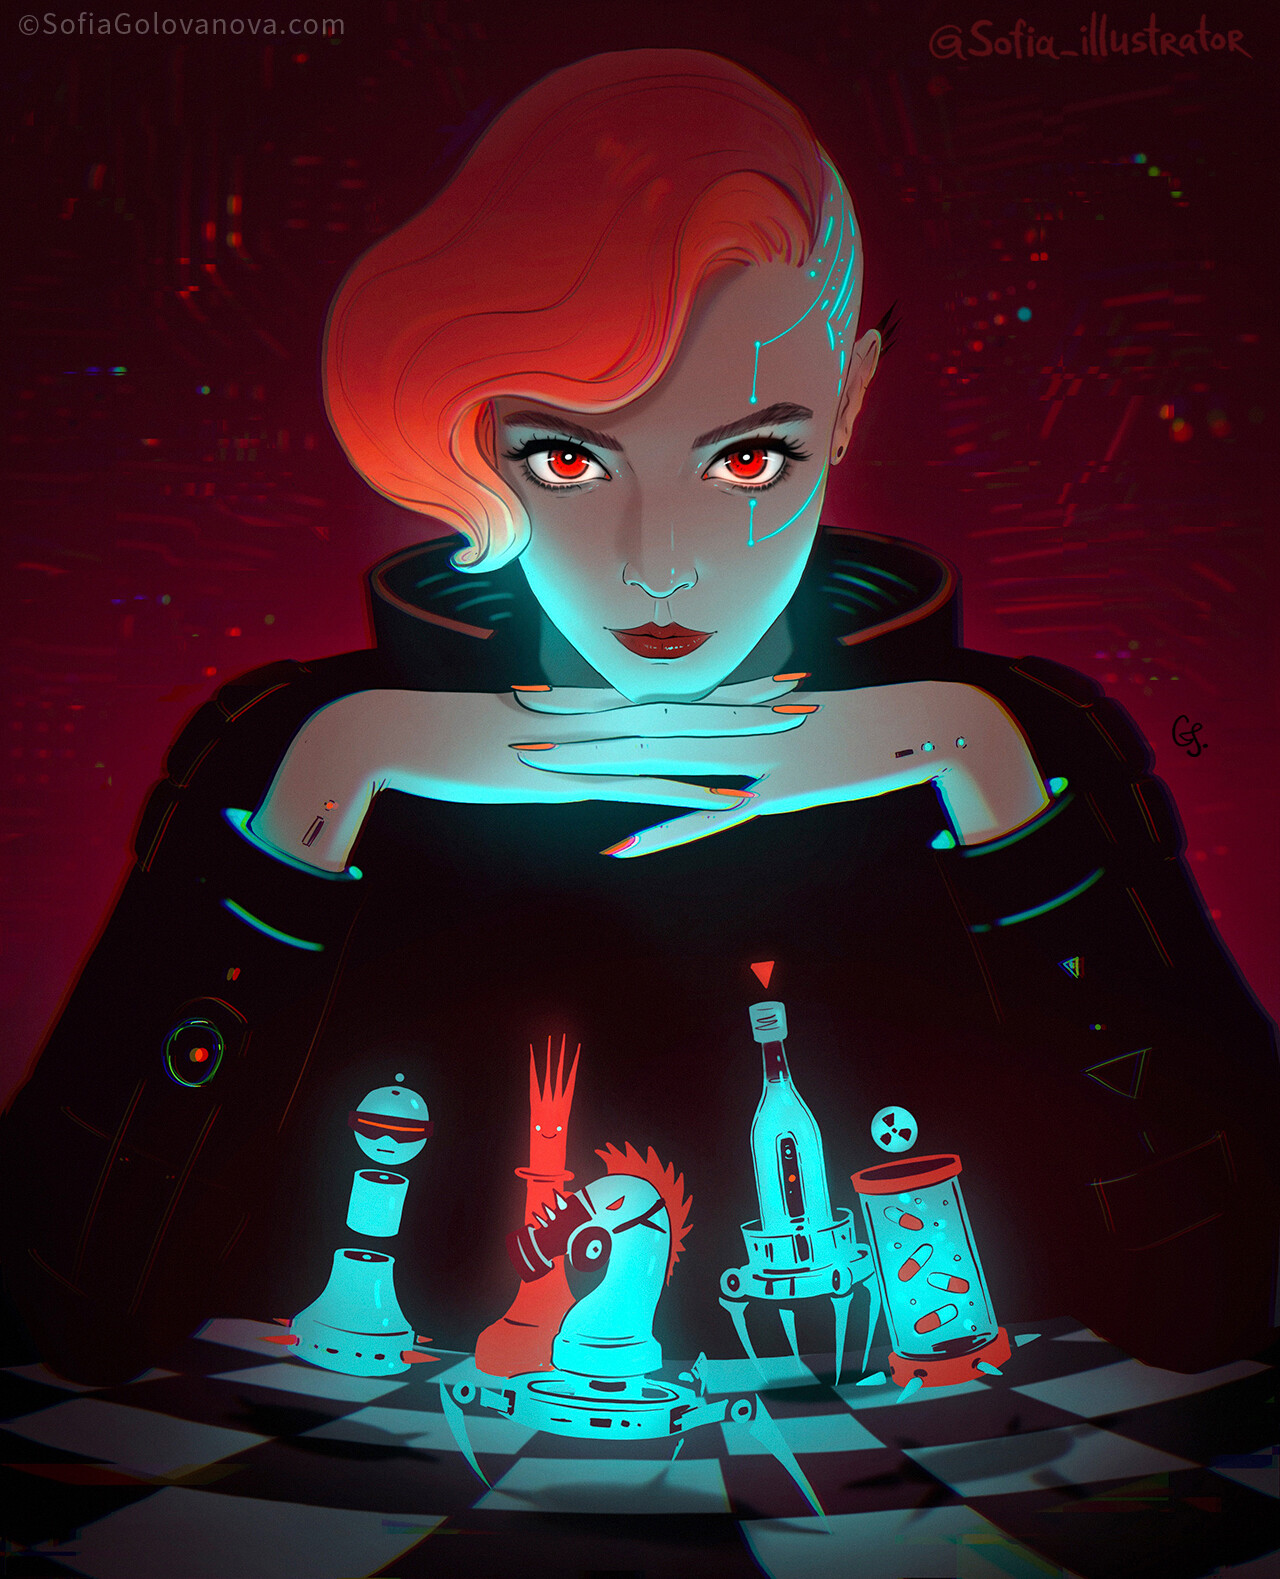 If The Queen's Gambit were cyberpunk anime 😊♟by Sofia Golovanova :  r/Cyberpunk